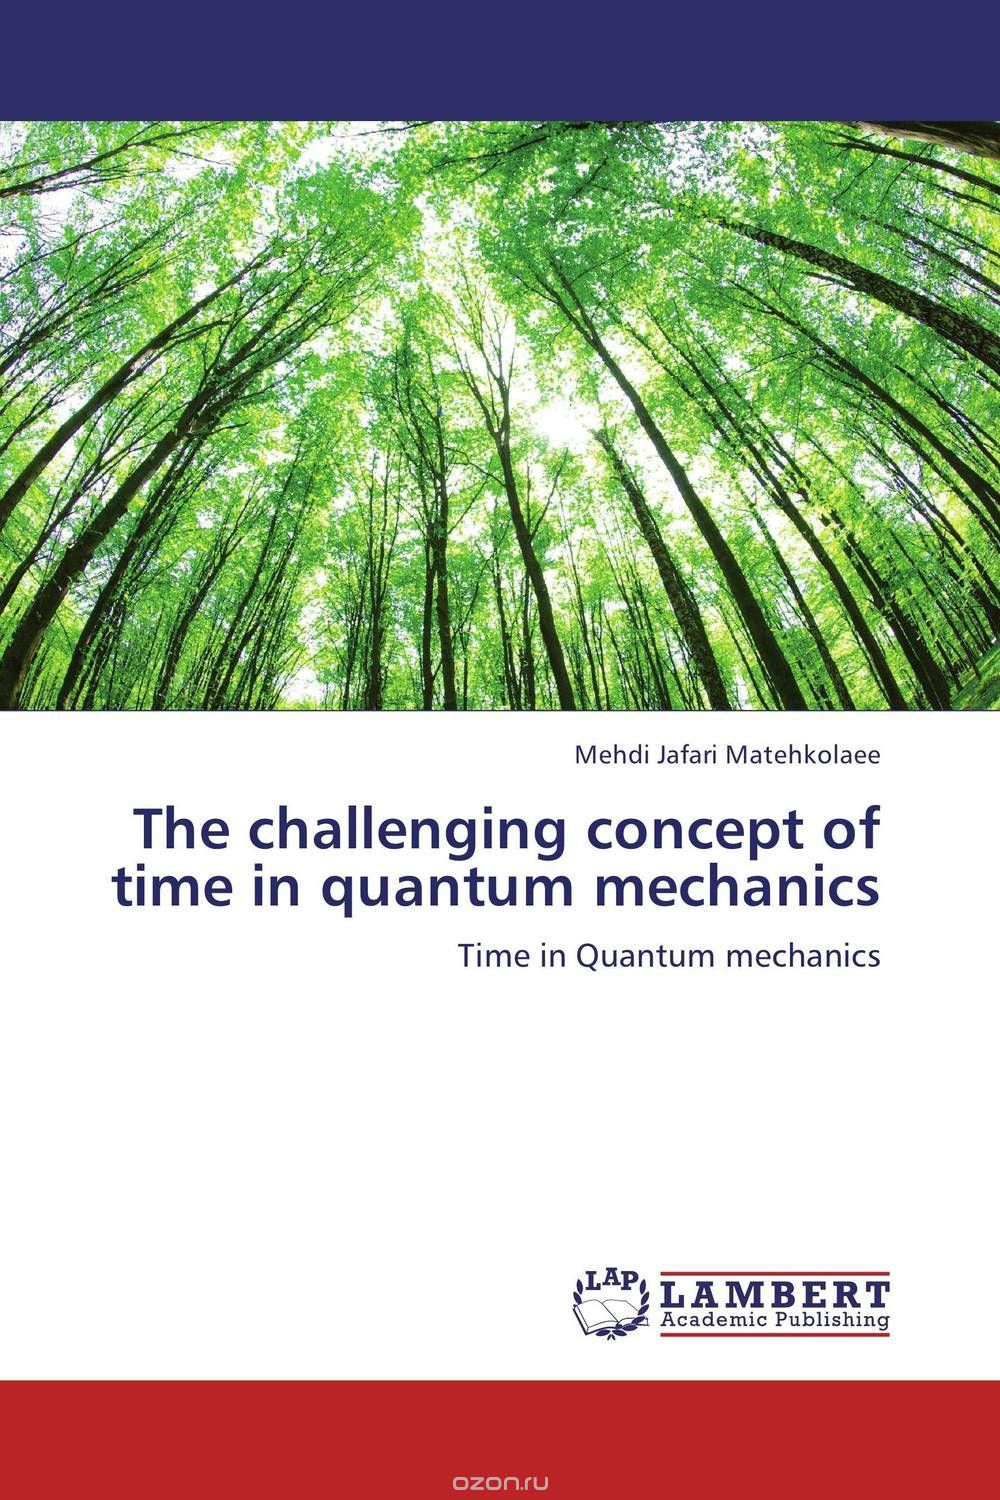 Скачать книгу "The challenging  concept of time in quantum mechanics"